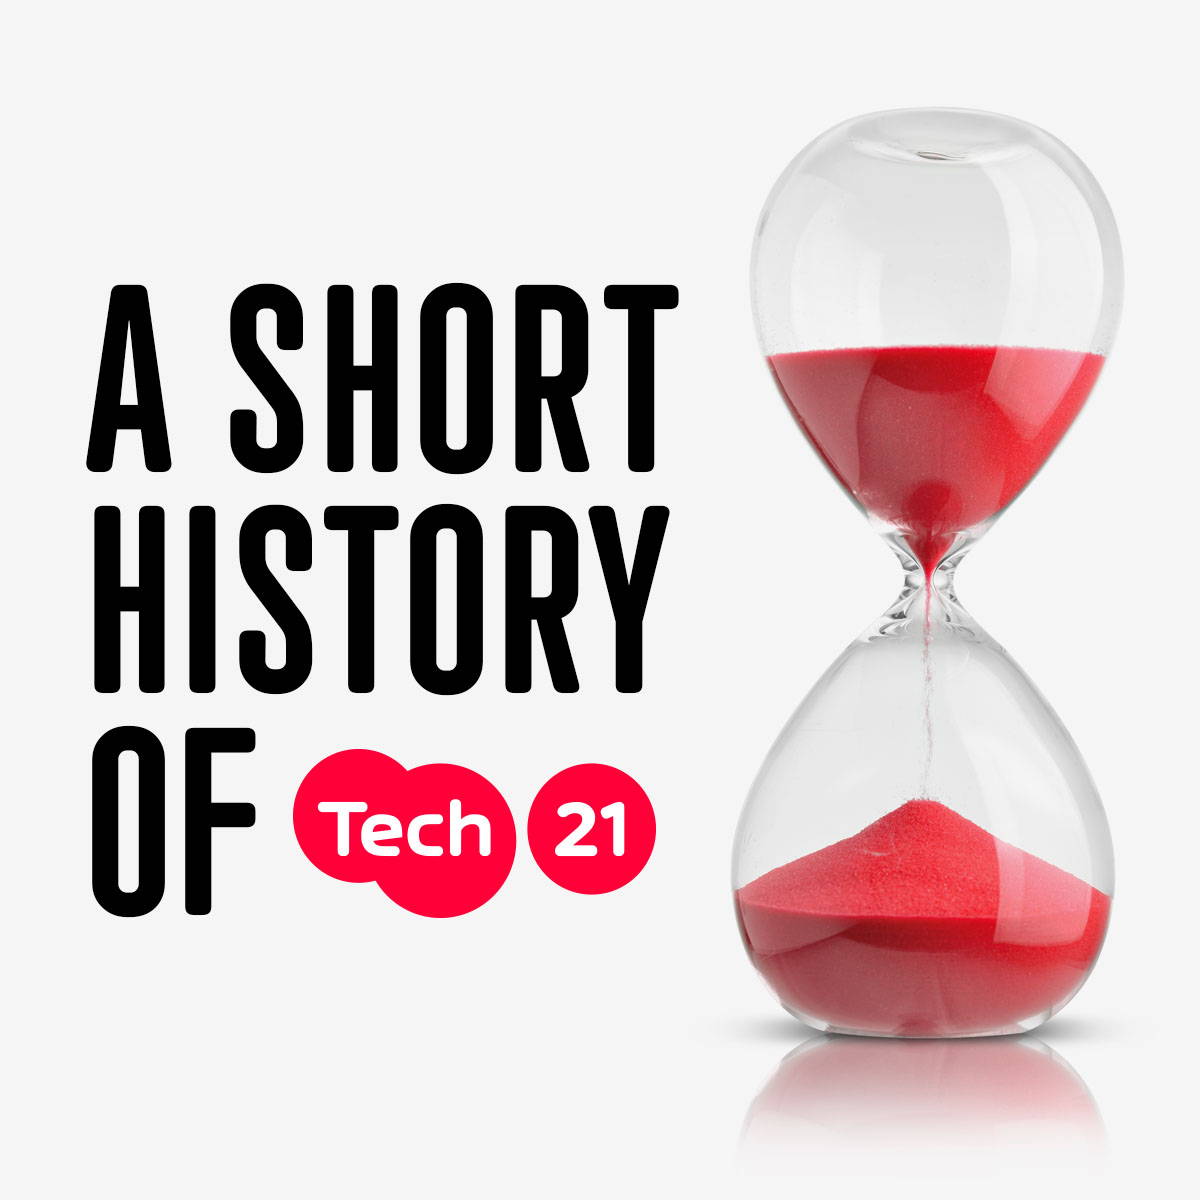 A short history of Tech21